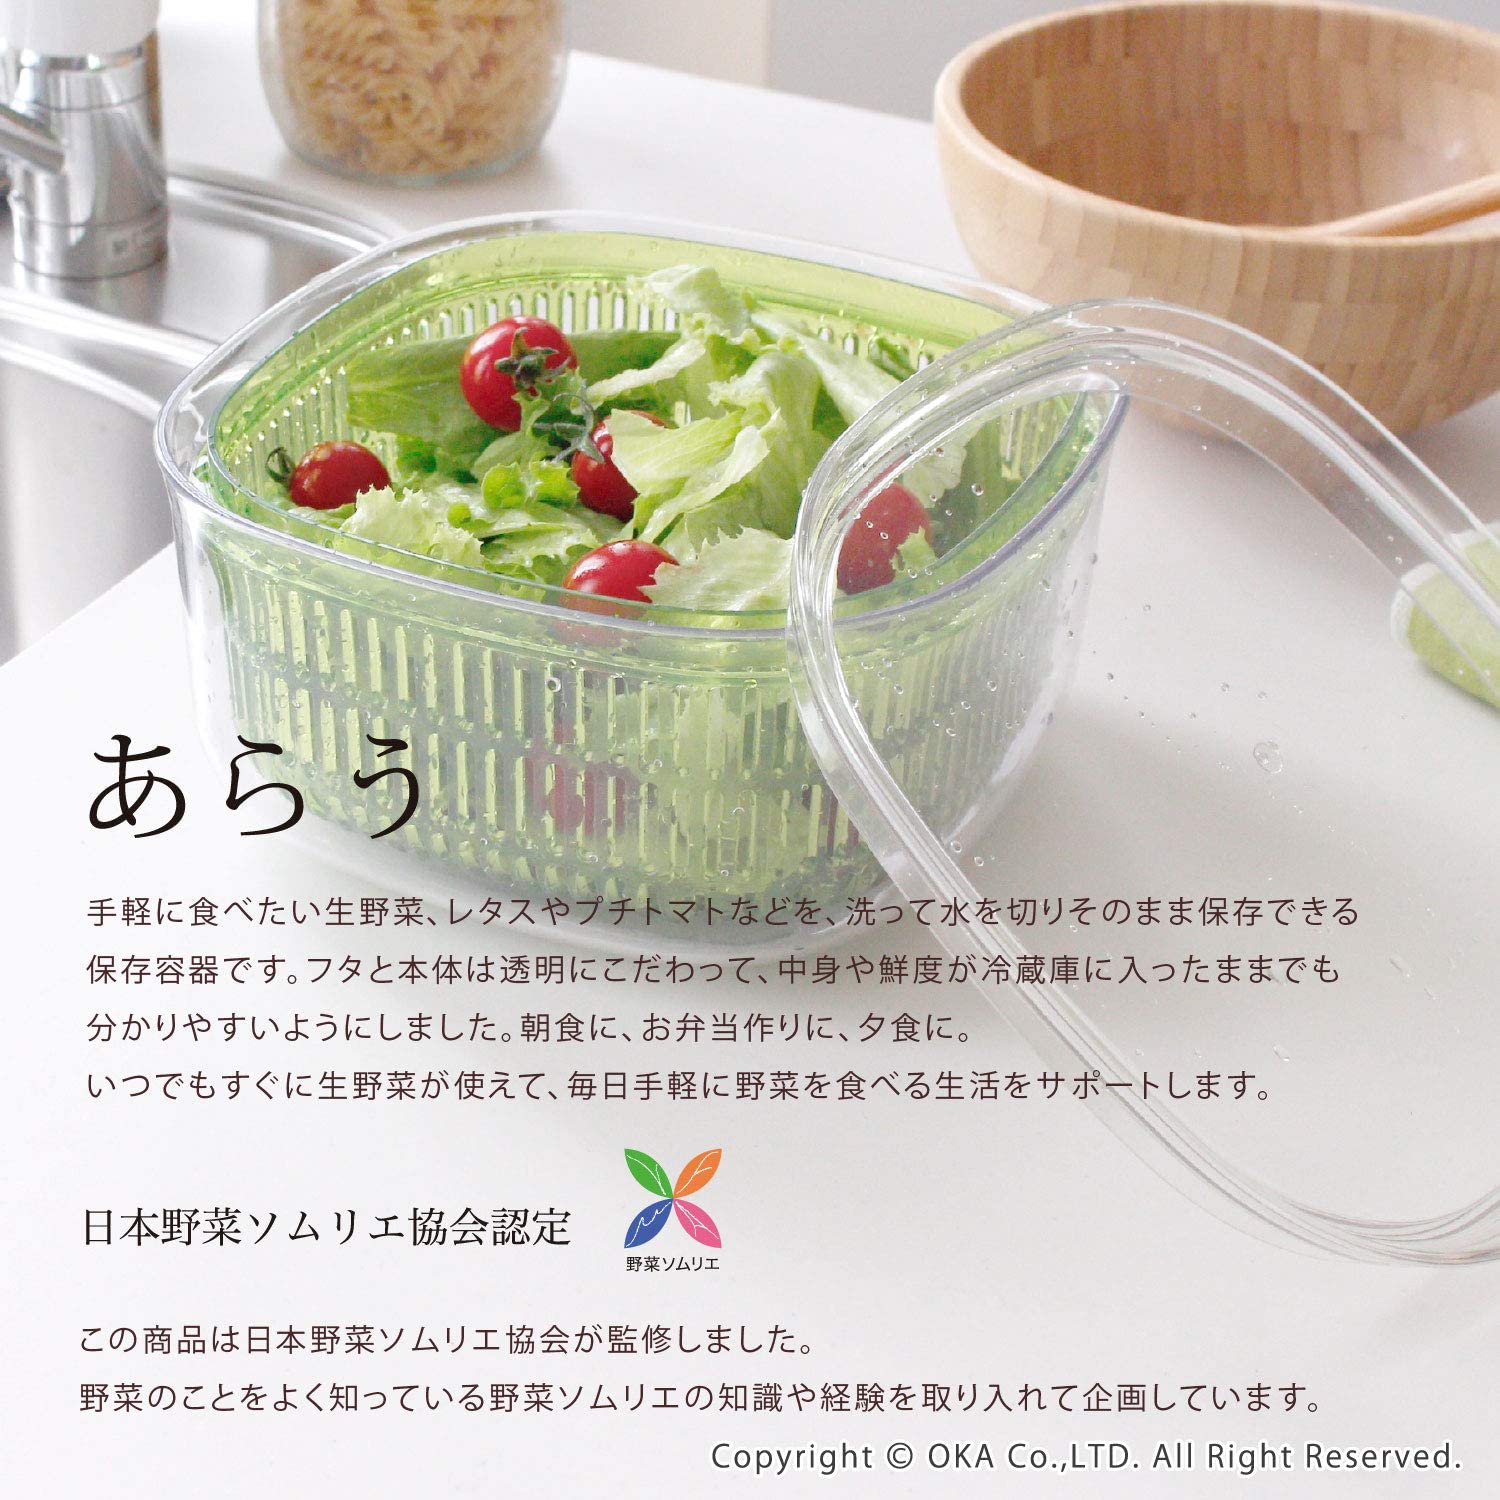 oka(OKA) vegetable stocker white regular bejimaji series oh .